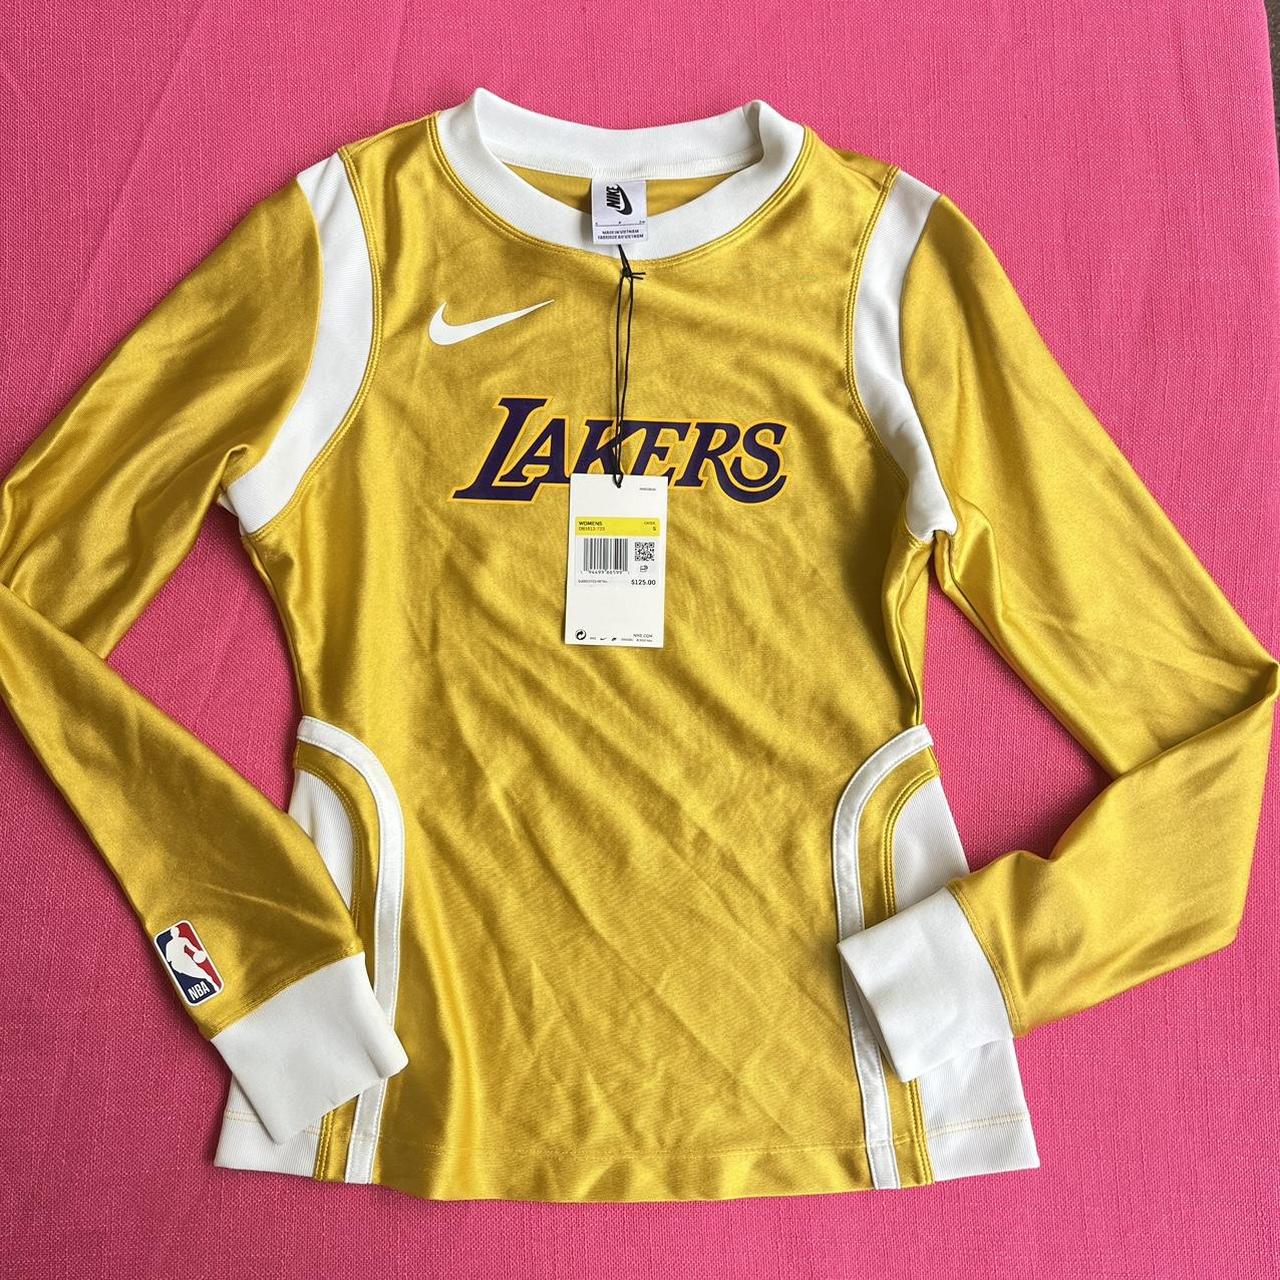 Nike x Ambush NBA Collection Lakers Shirt Gold/White/Purple